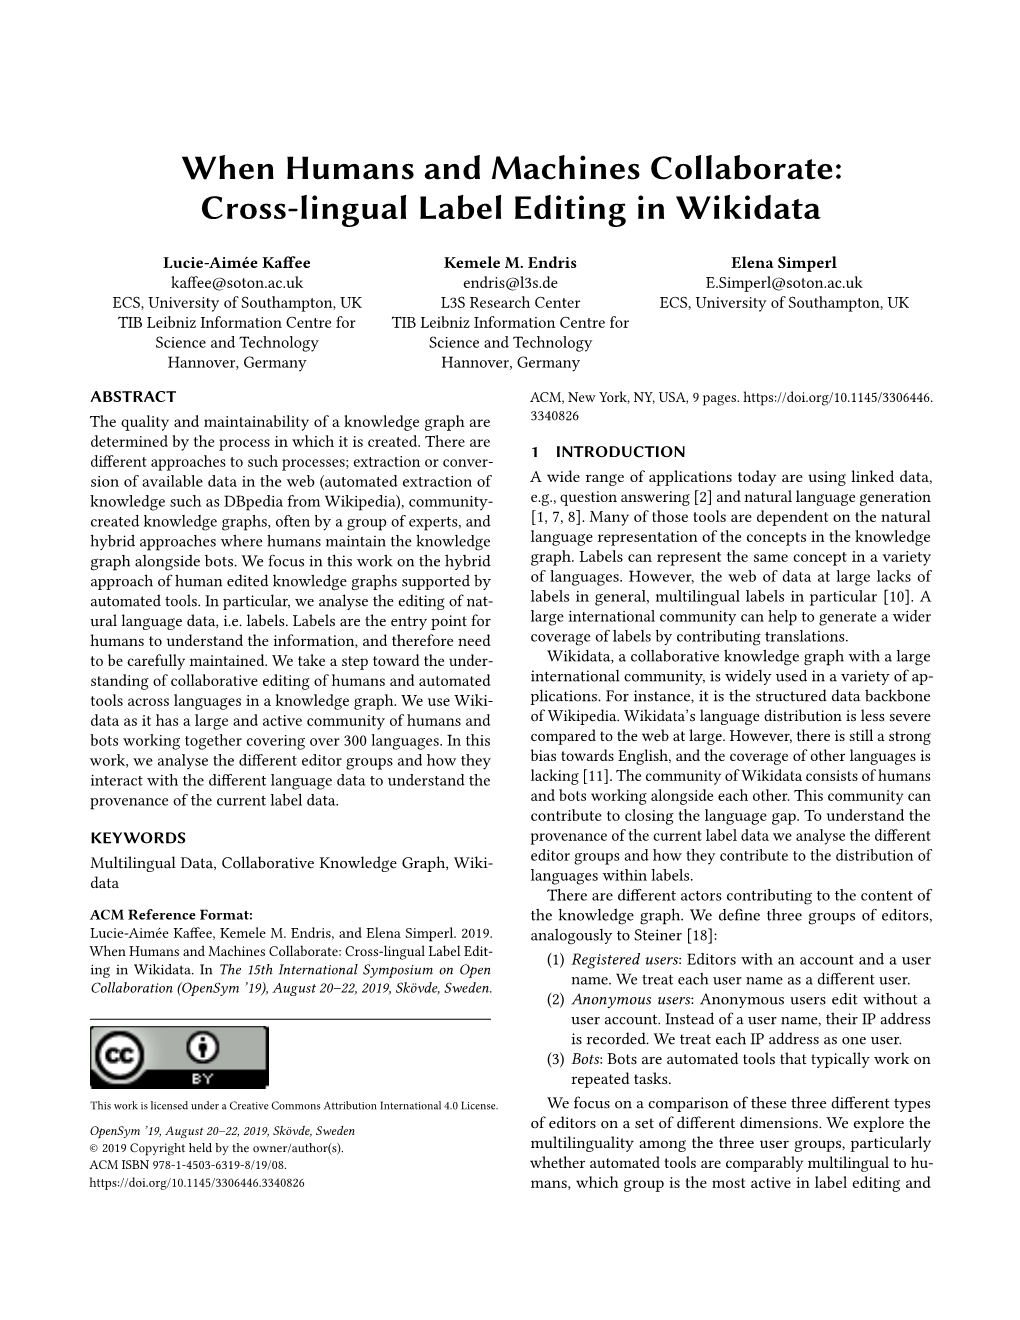 Cross-Lingual Label Editing in Wikidata